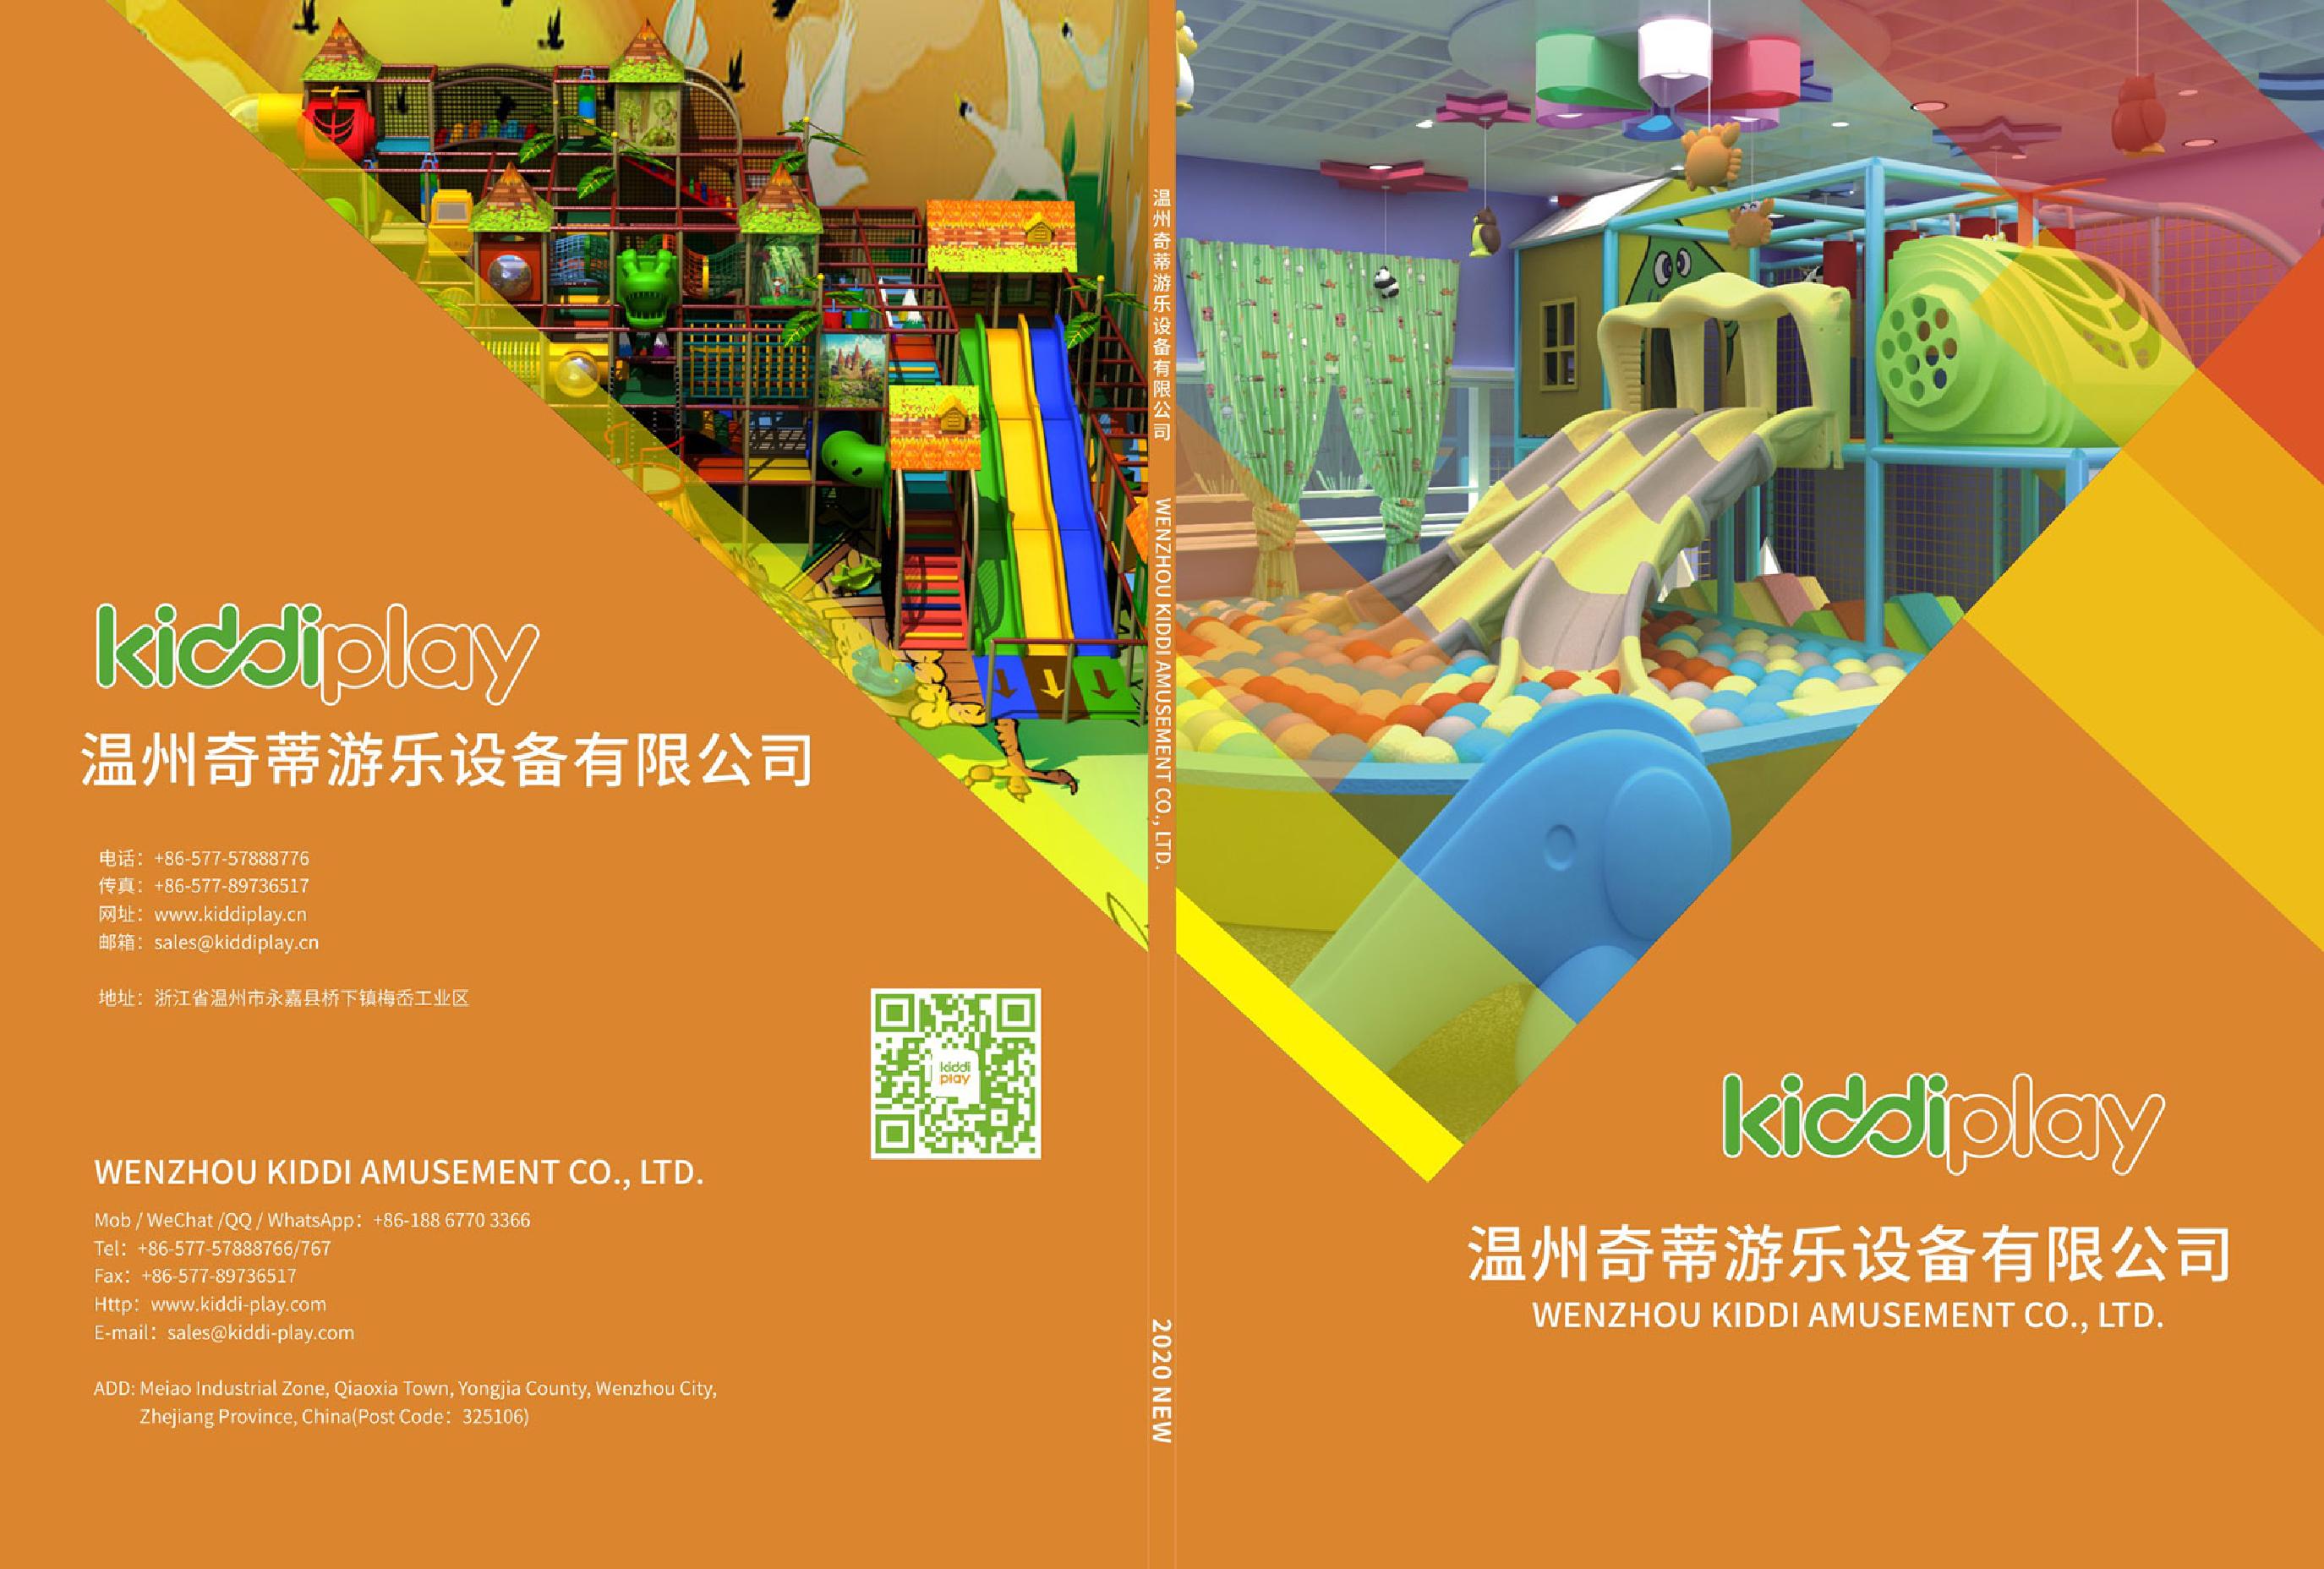 2019 Indoor Playground and Trampoline Parks - KiddiPlay_0.jpg